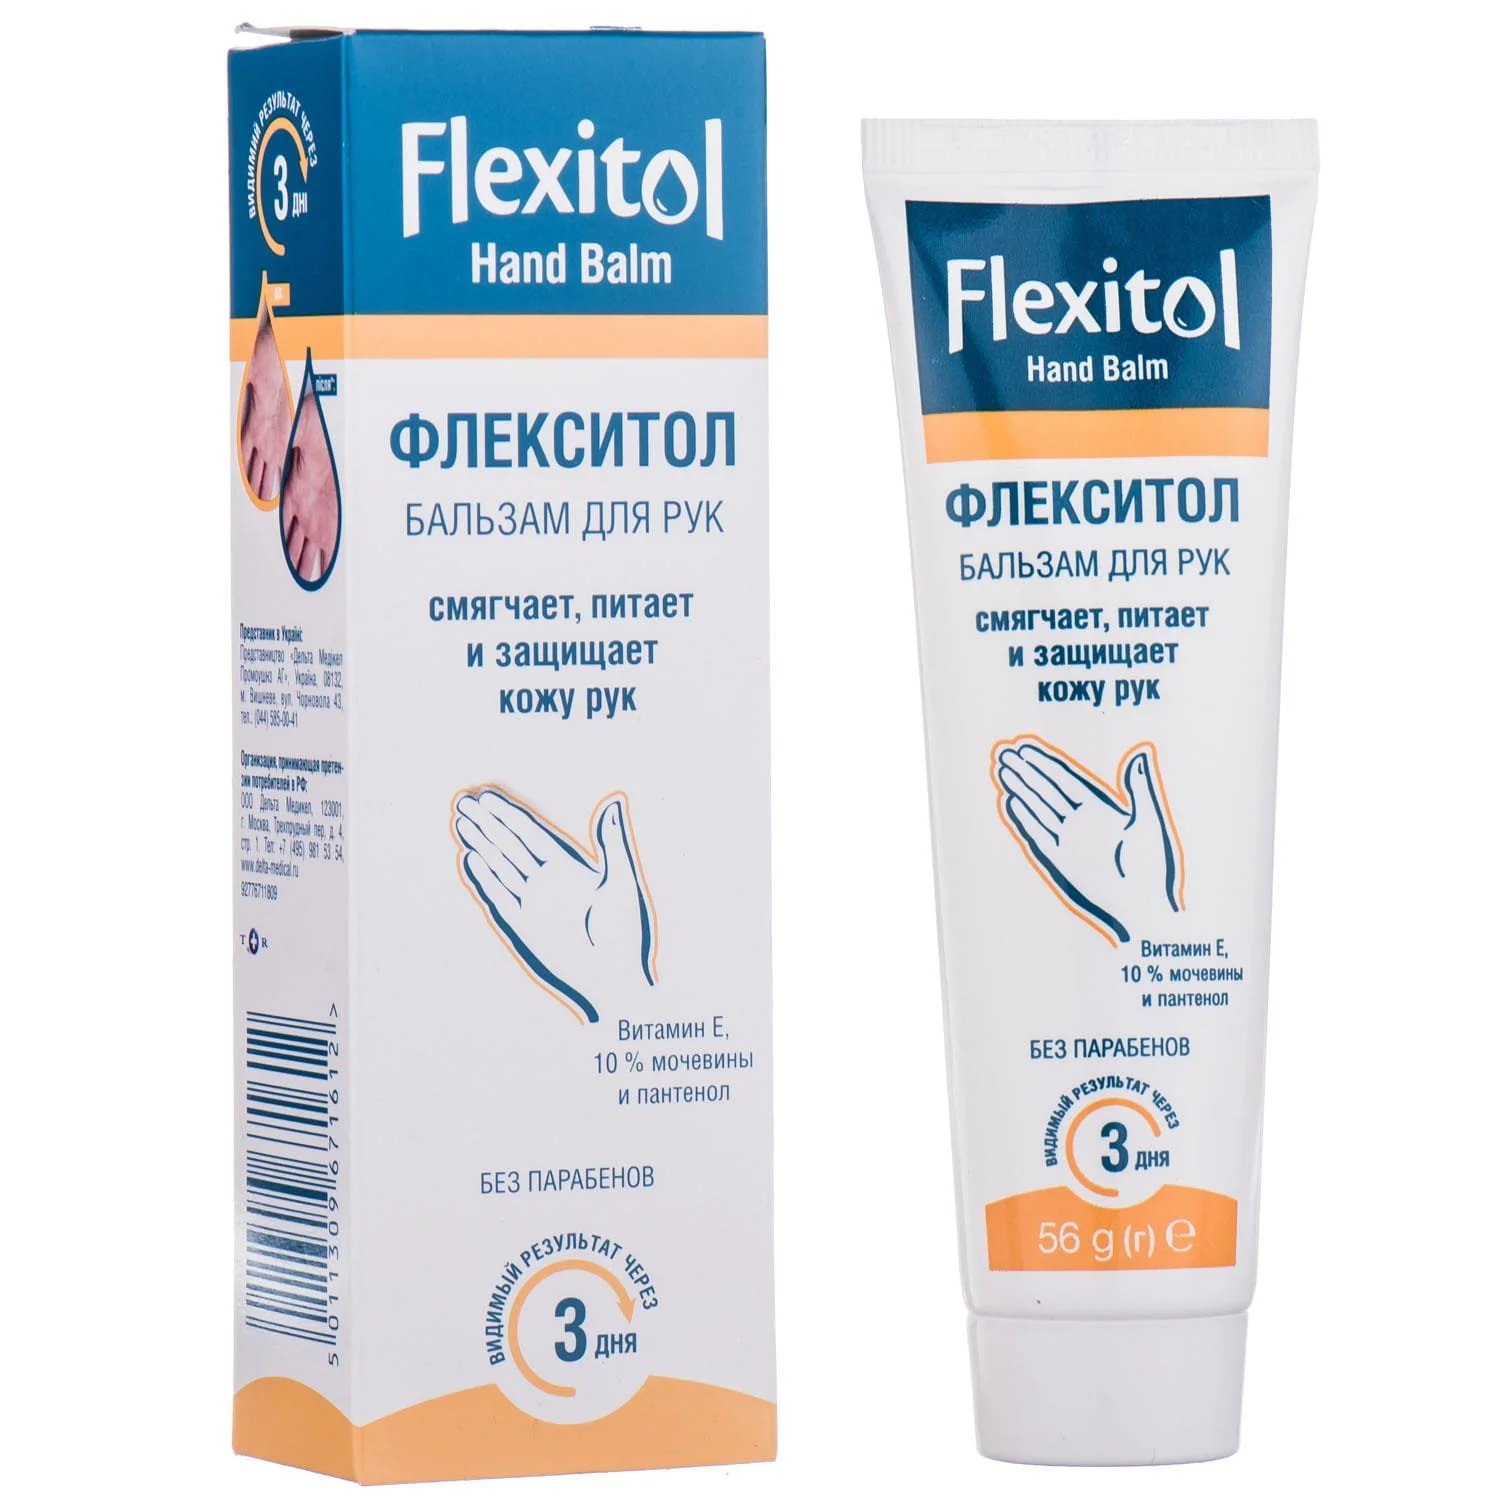 Флекситол бальзам для рук 56г. Flexitol крем для рук. Флекситол бальзам д/рук д/оч сух кожи 56г Thornton & Ross Ltd.. Флекситол для ног.